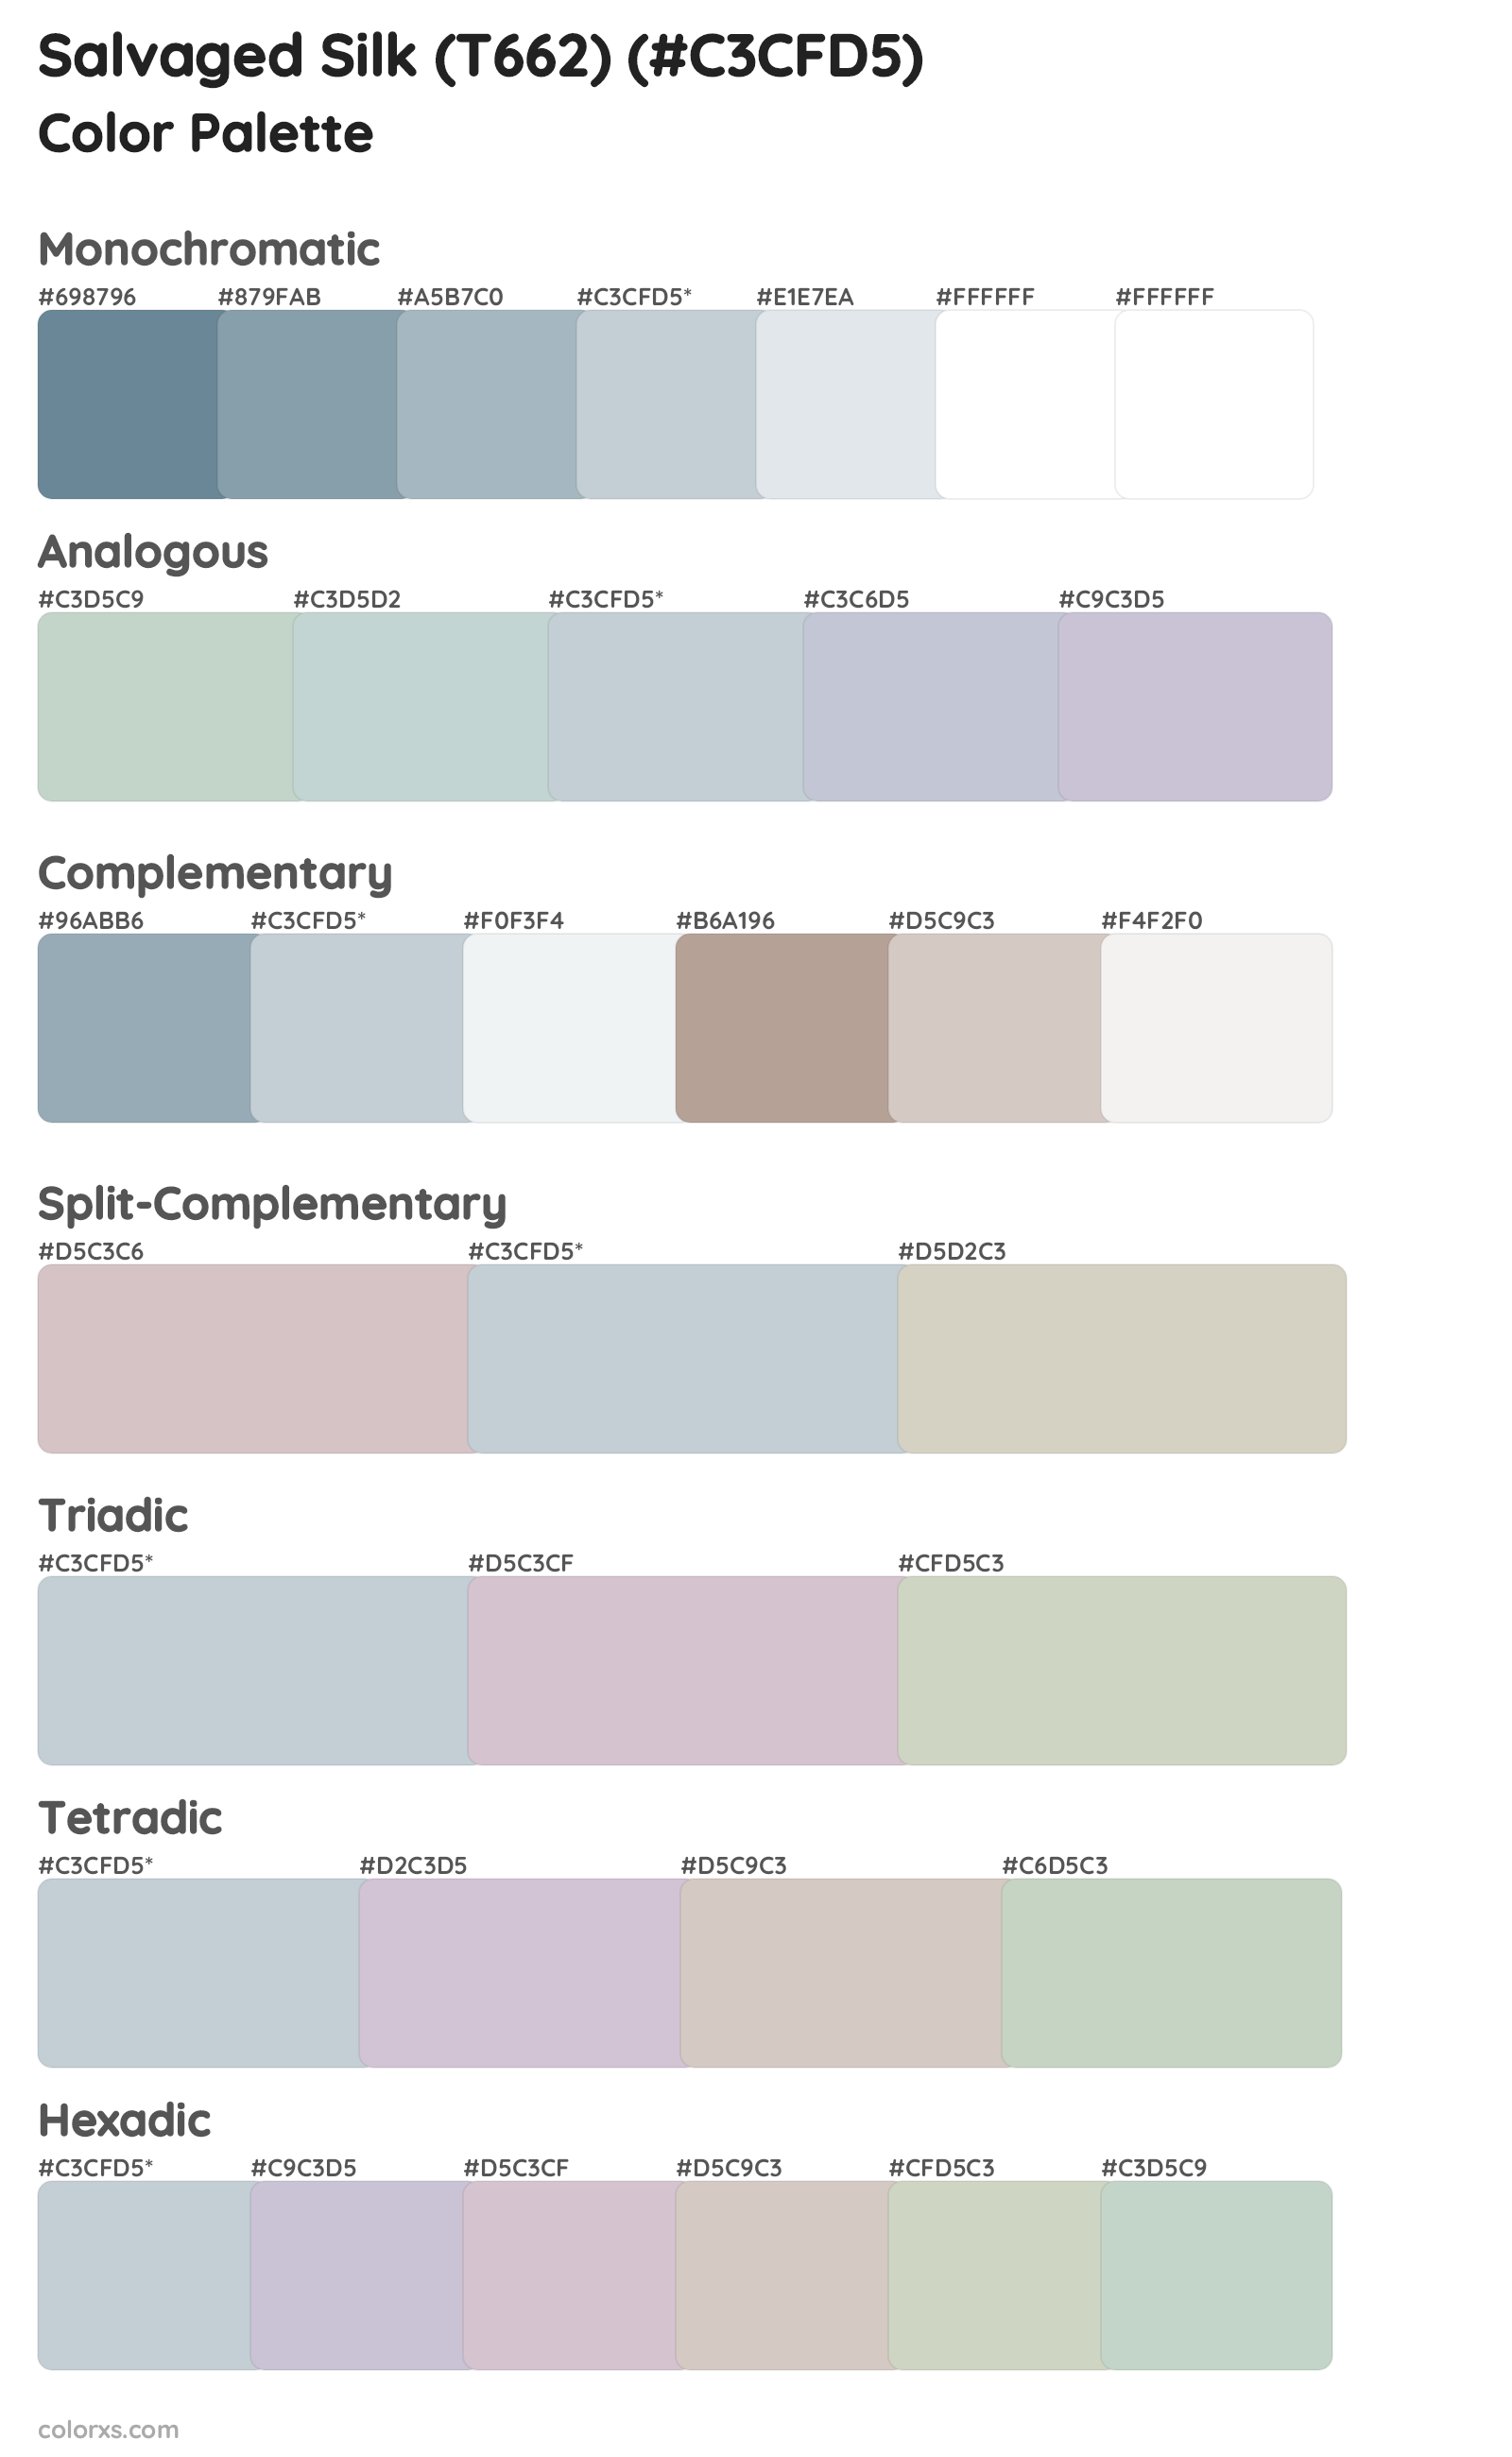 Salvaged Silk (T662) Color Scheme Palettes